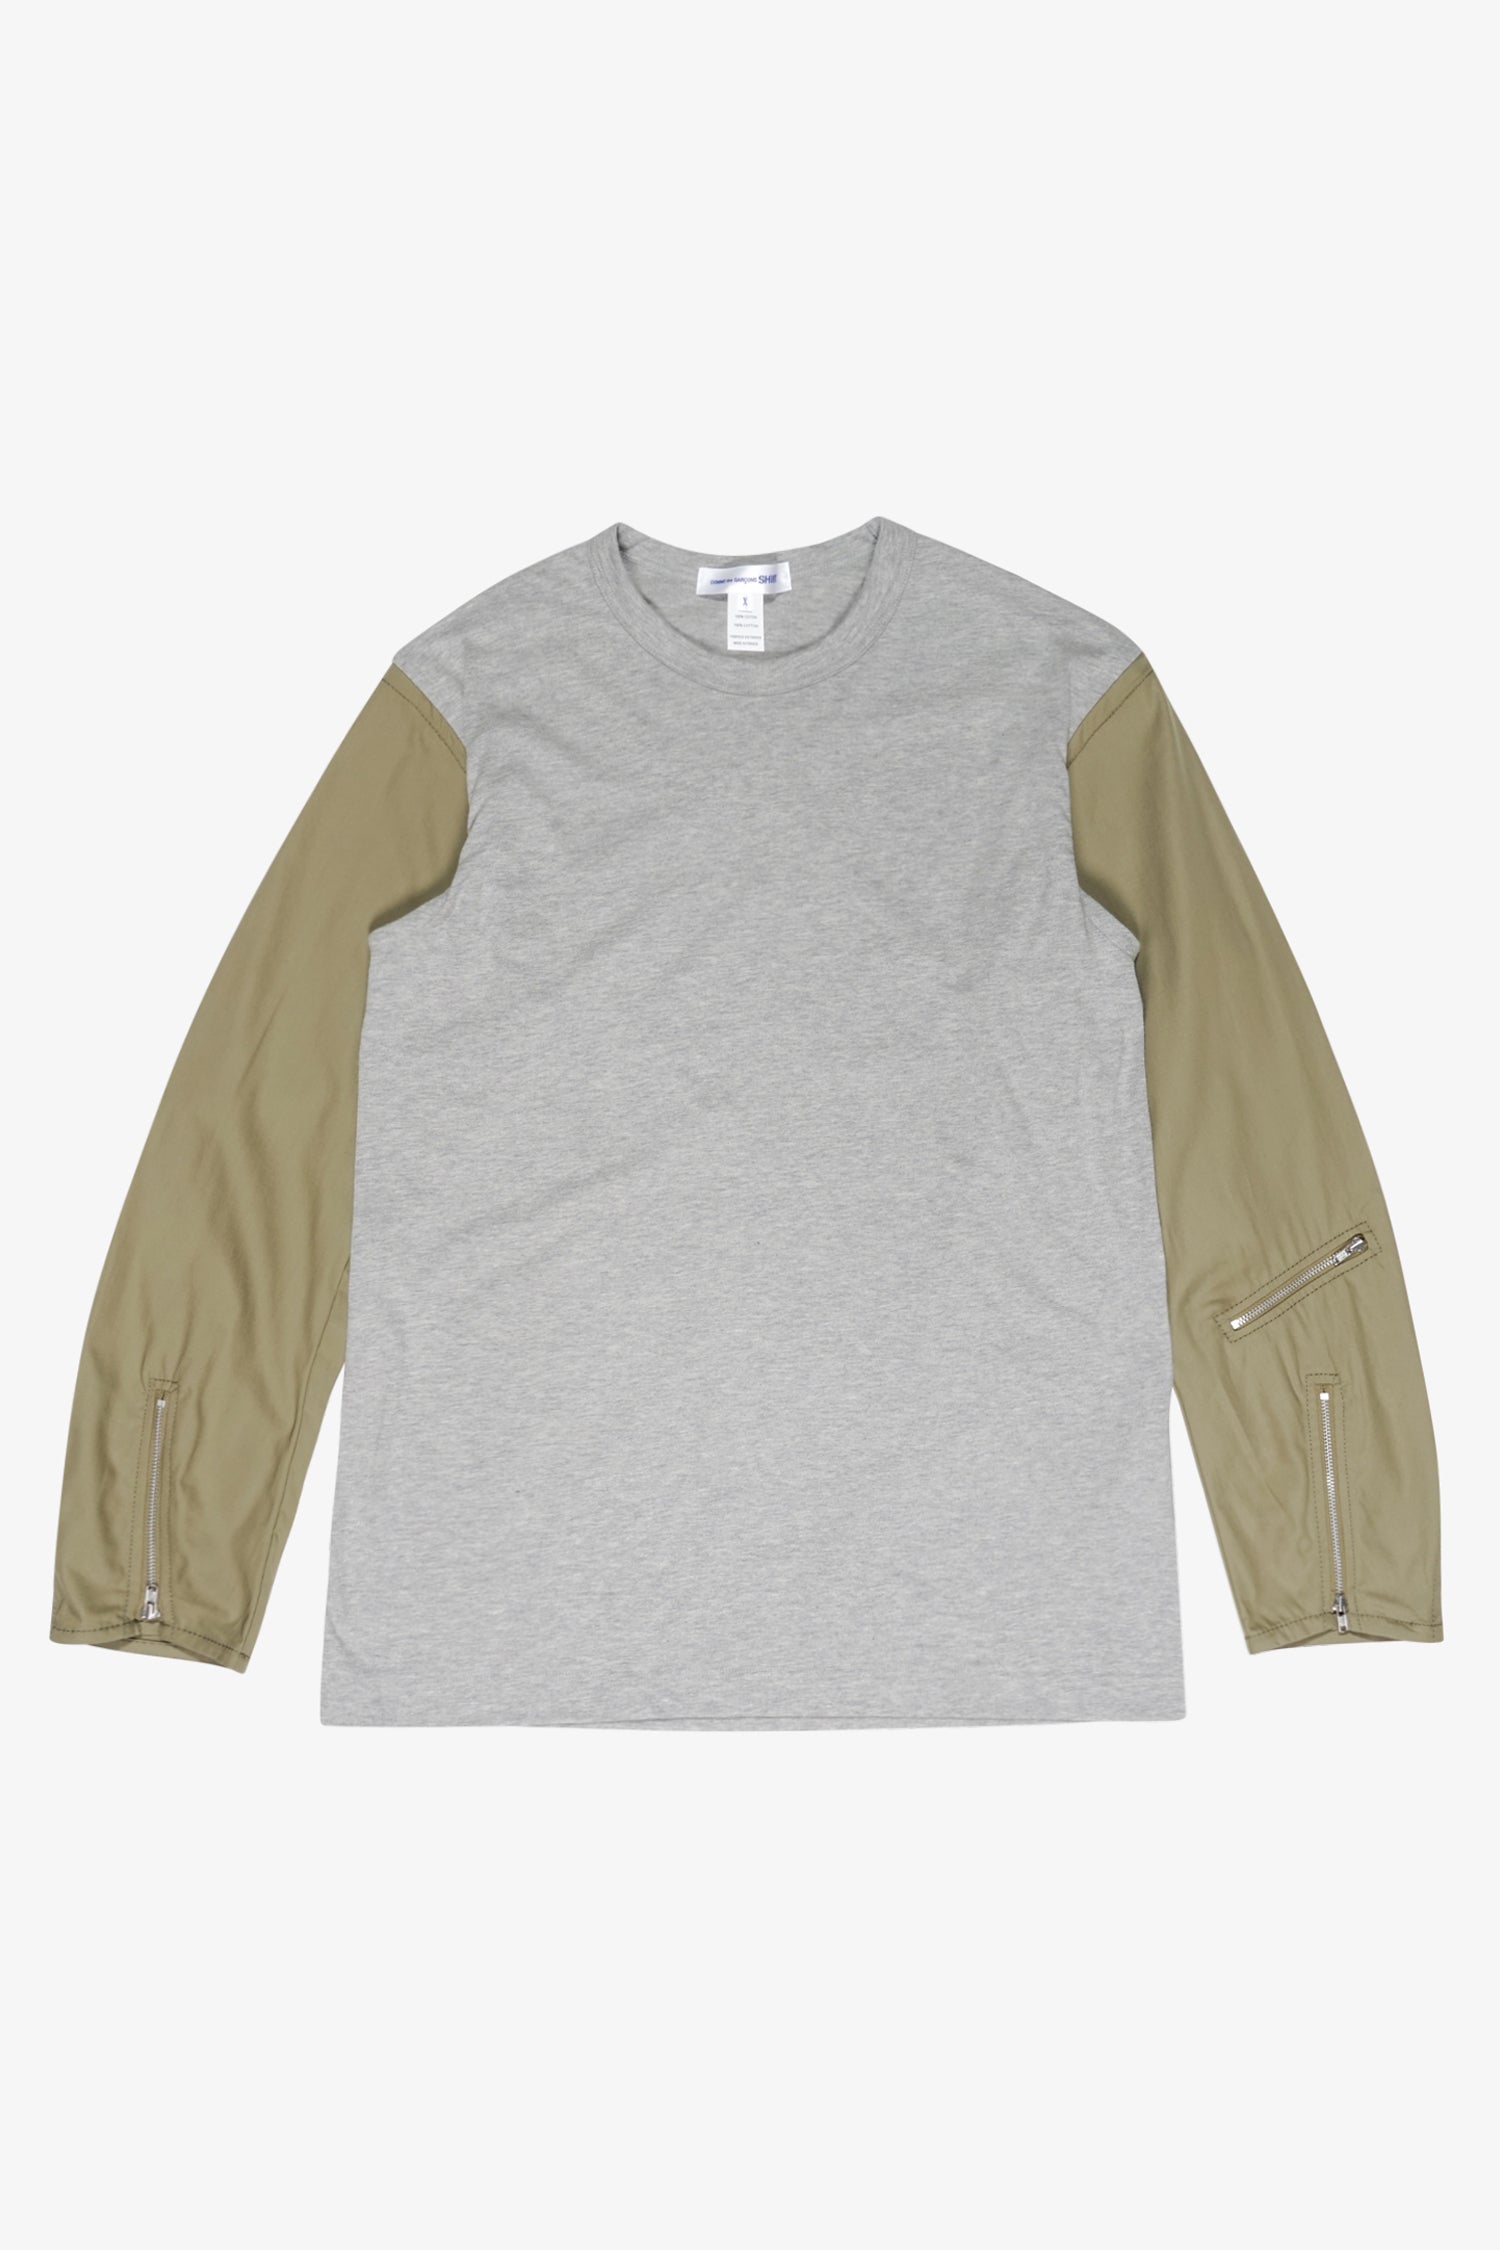 Selectshop FRAME - COMME DES GARÇONS SHIRT Zip Sleeves Sweatshirt Sweatshirts Dubai